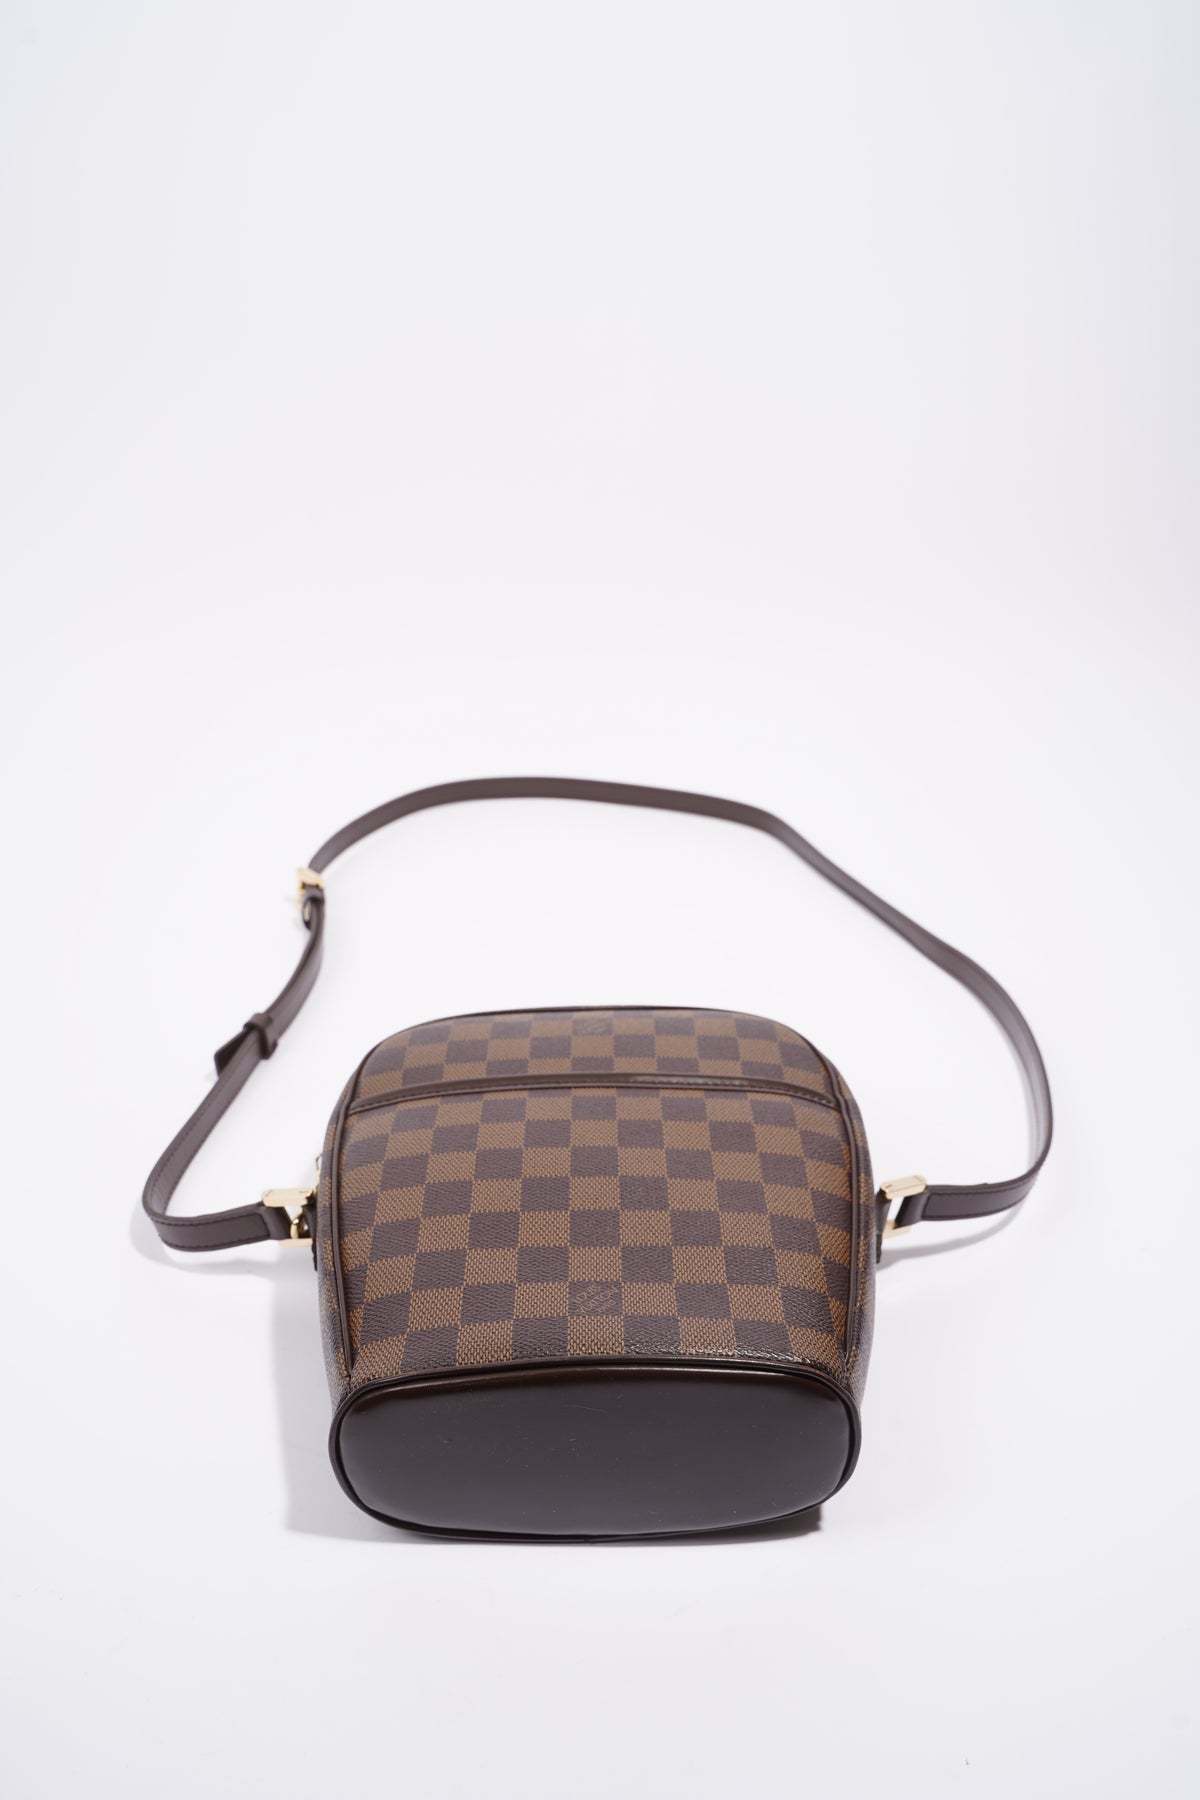 Louis Vuitton - Authenticated Ipanema Handbag - Leather Beige Plain for Women, Very Good Condition